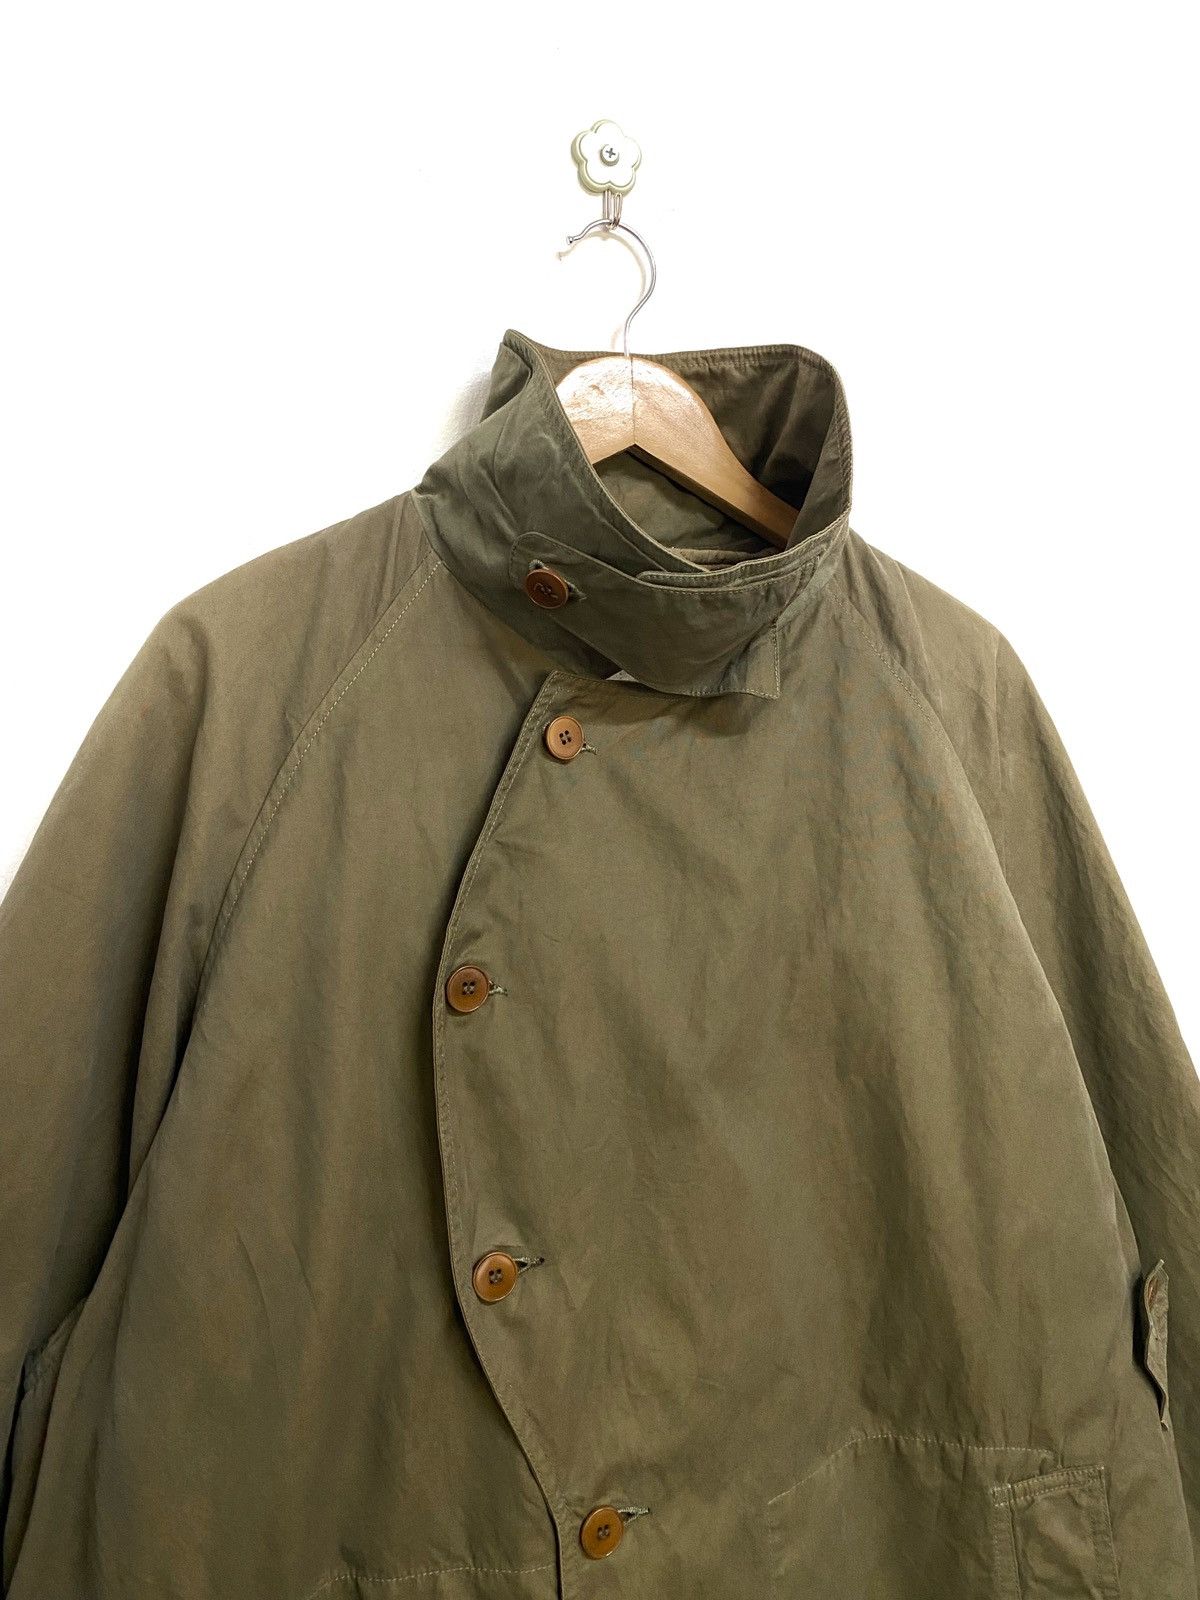 Archival Clothing - Vintage C.P Company Massimo Osti Archive Jacket - 5